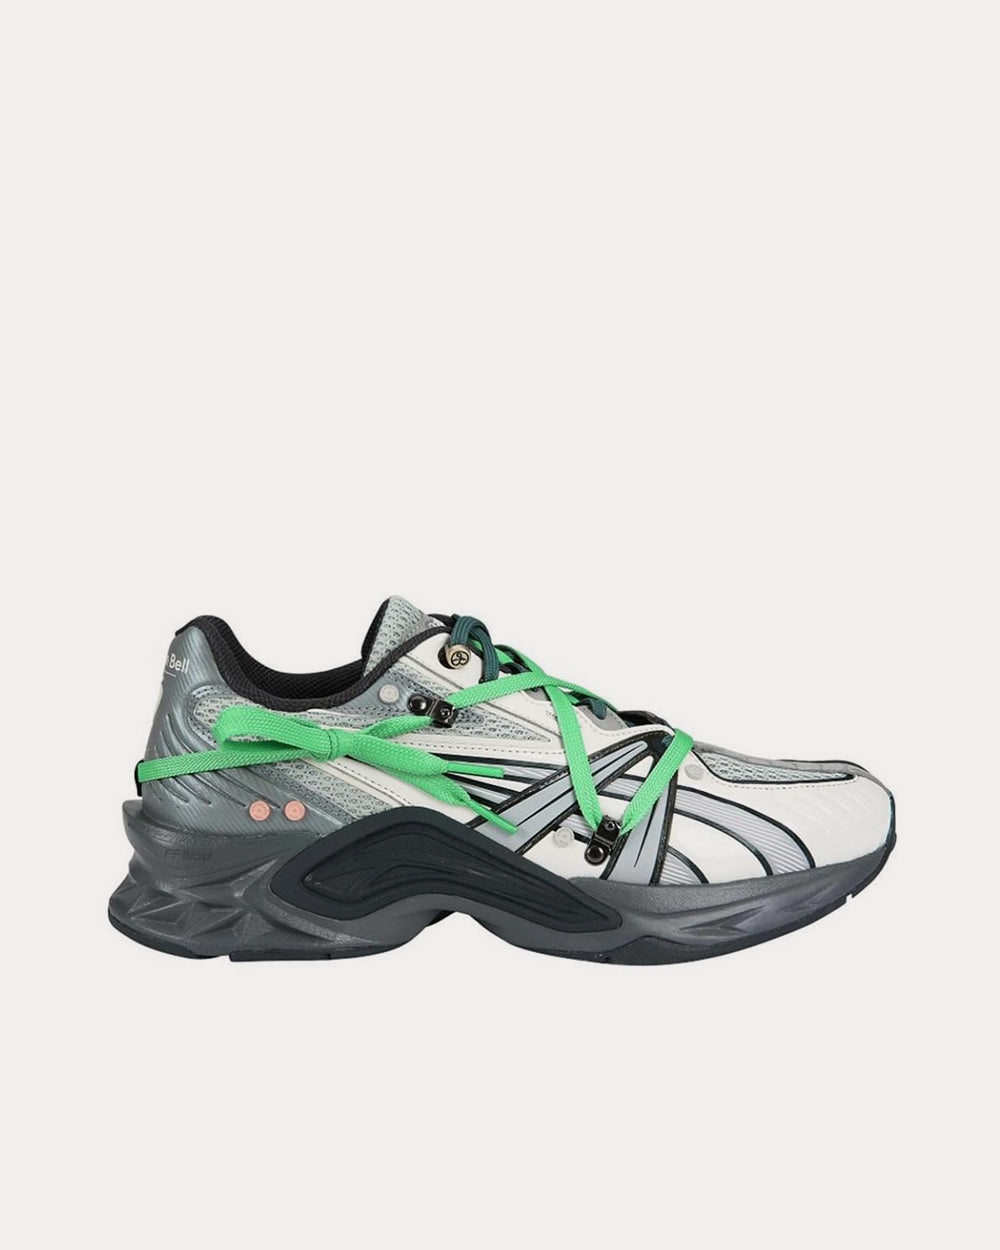 Protoblast Smoke Grey / Sea Grass Running Shoes